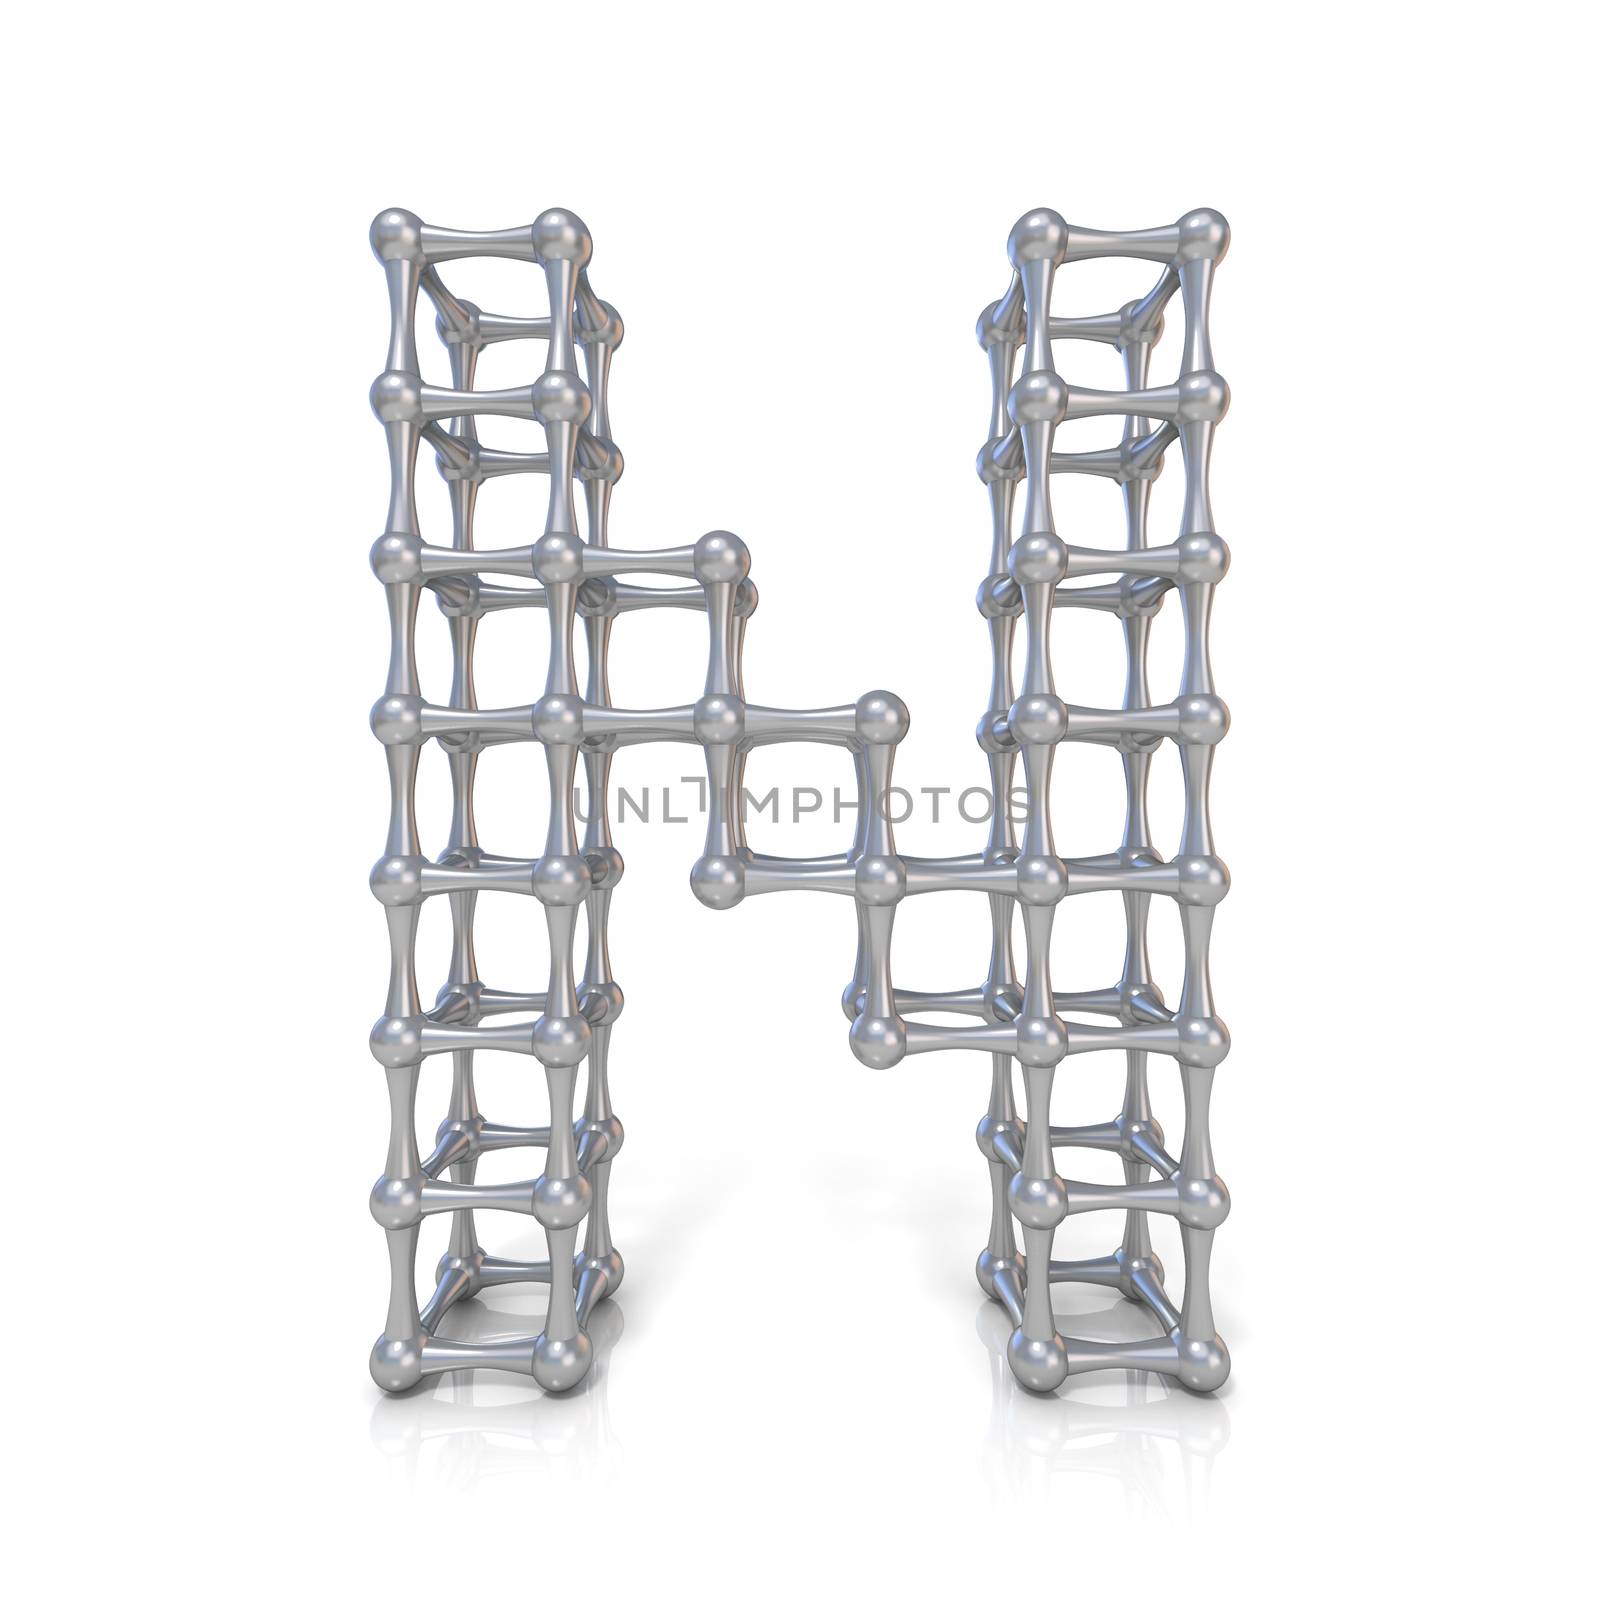 Metal lattice font letter N 3D by djmilic